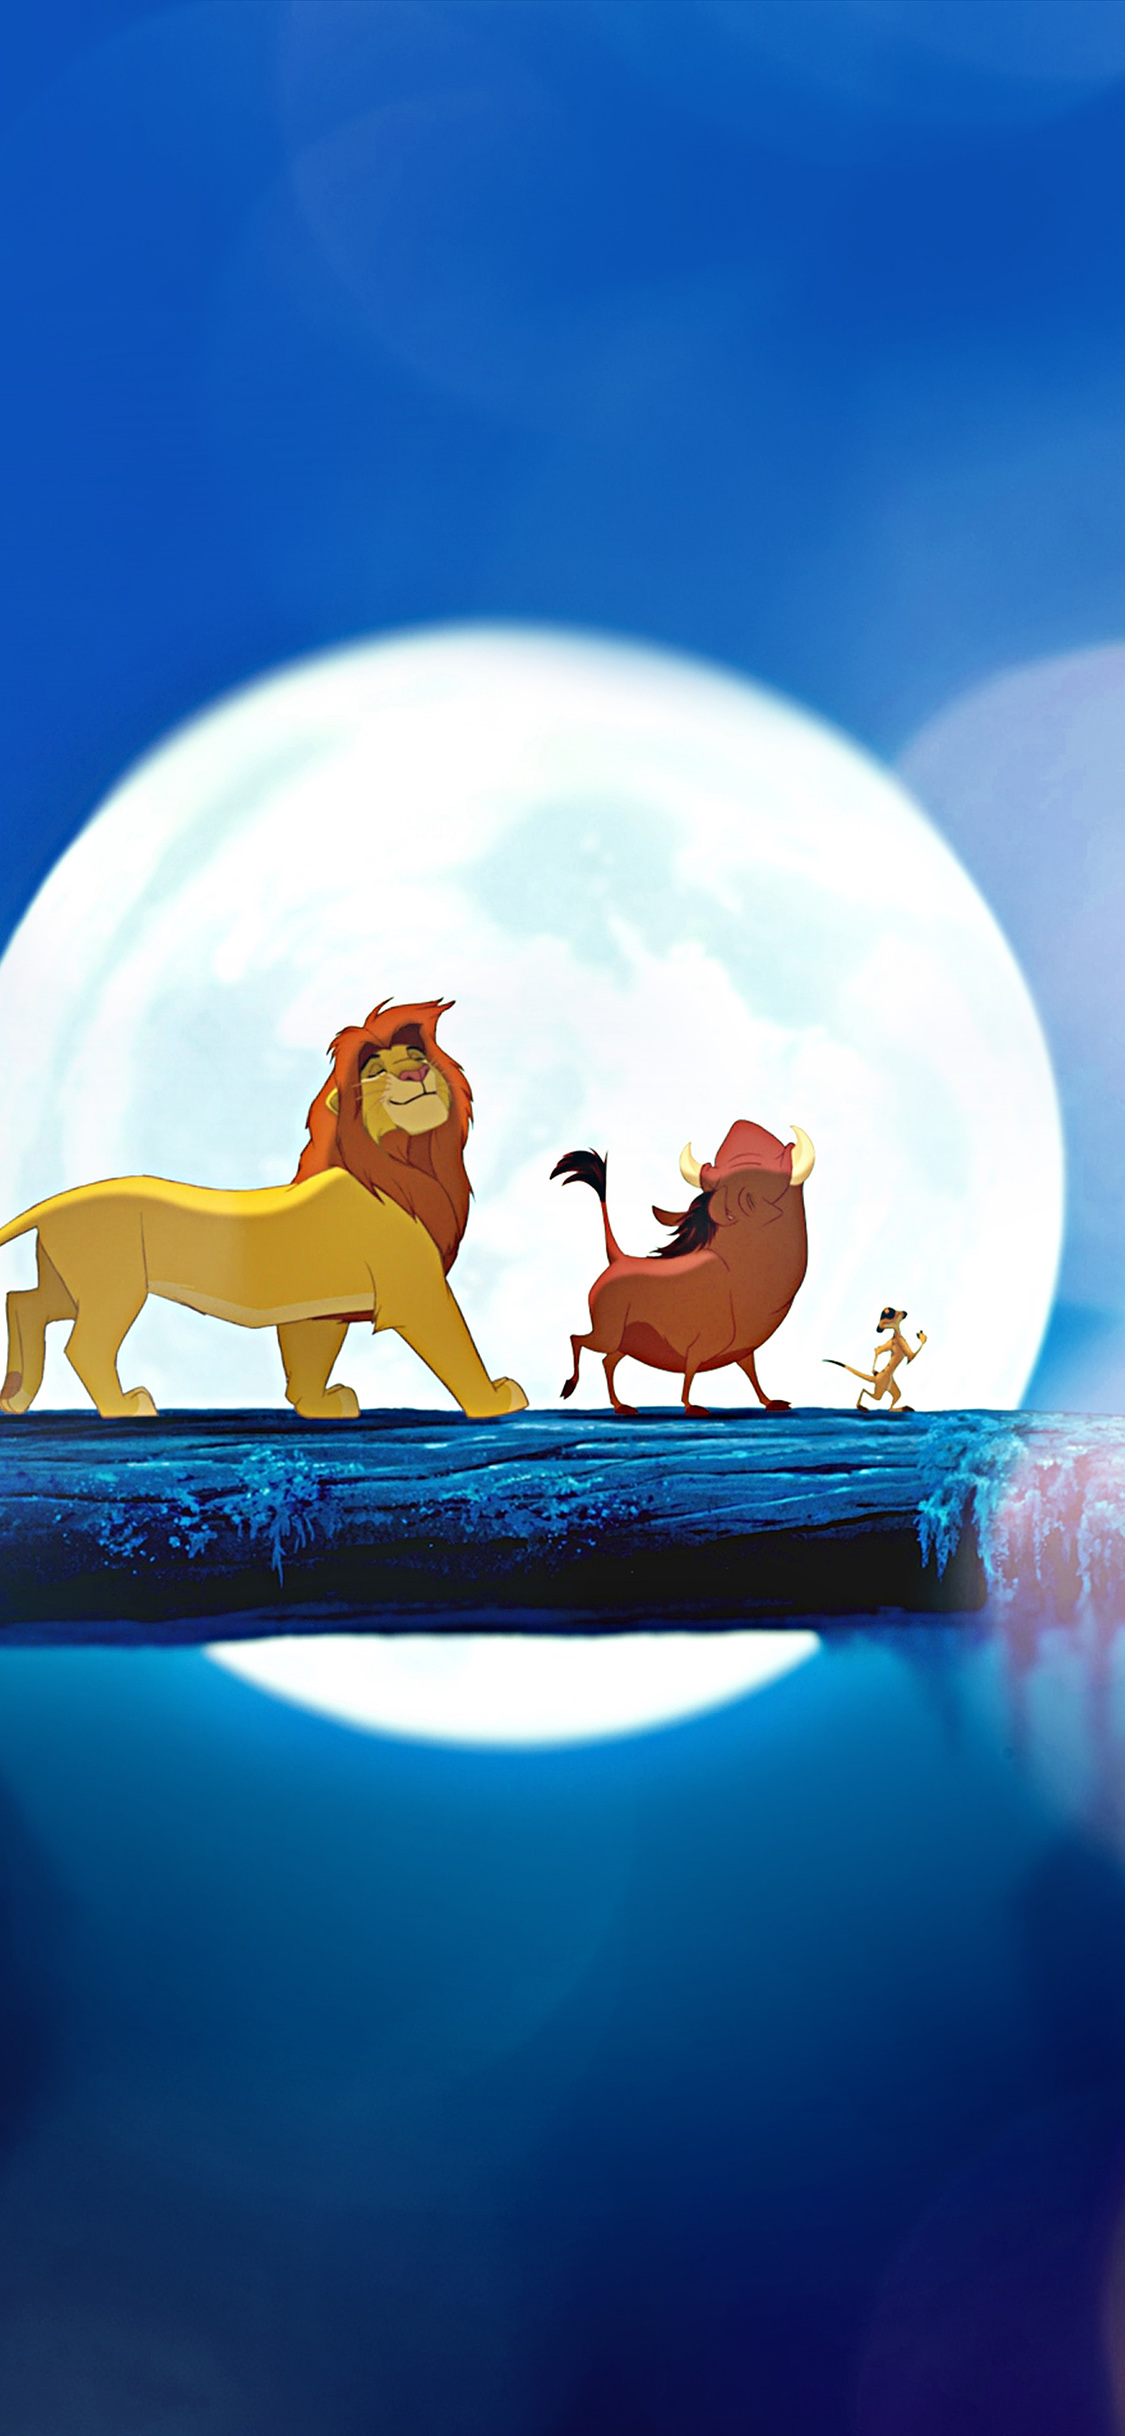 Lion king iPhone wallpaper 